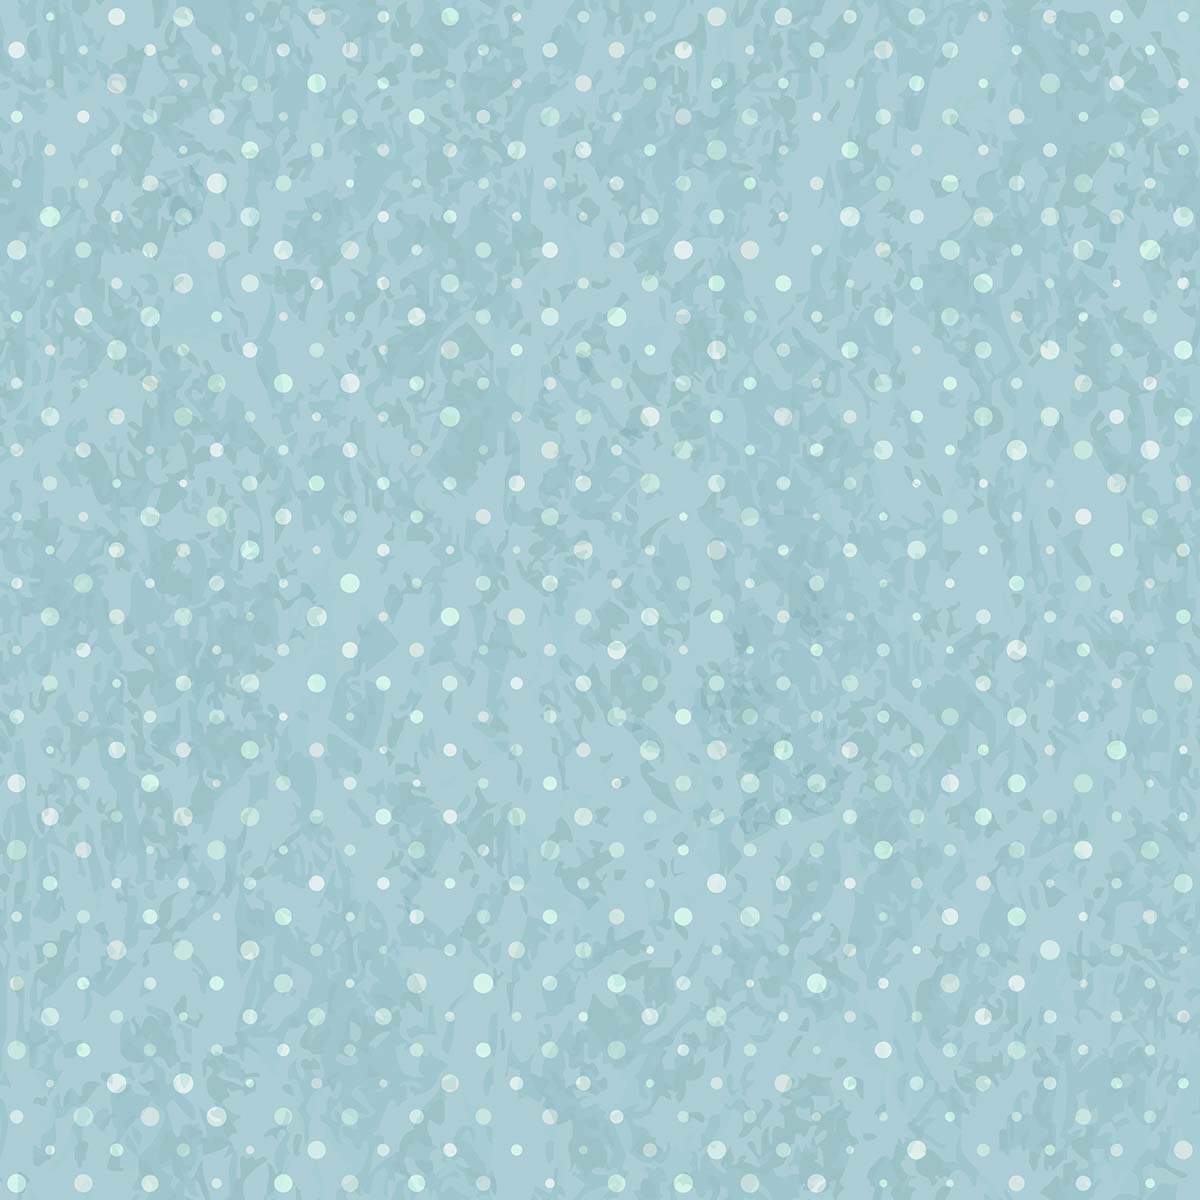 A blue and white polka dot pattern